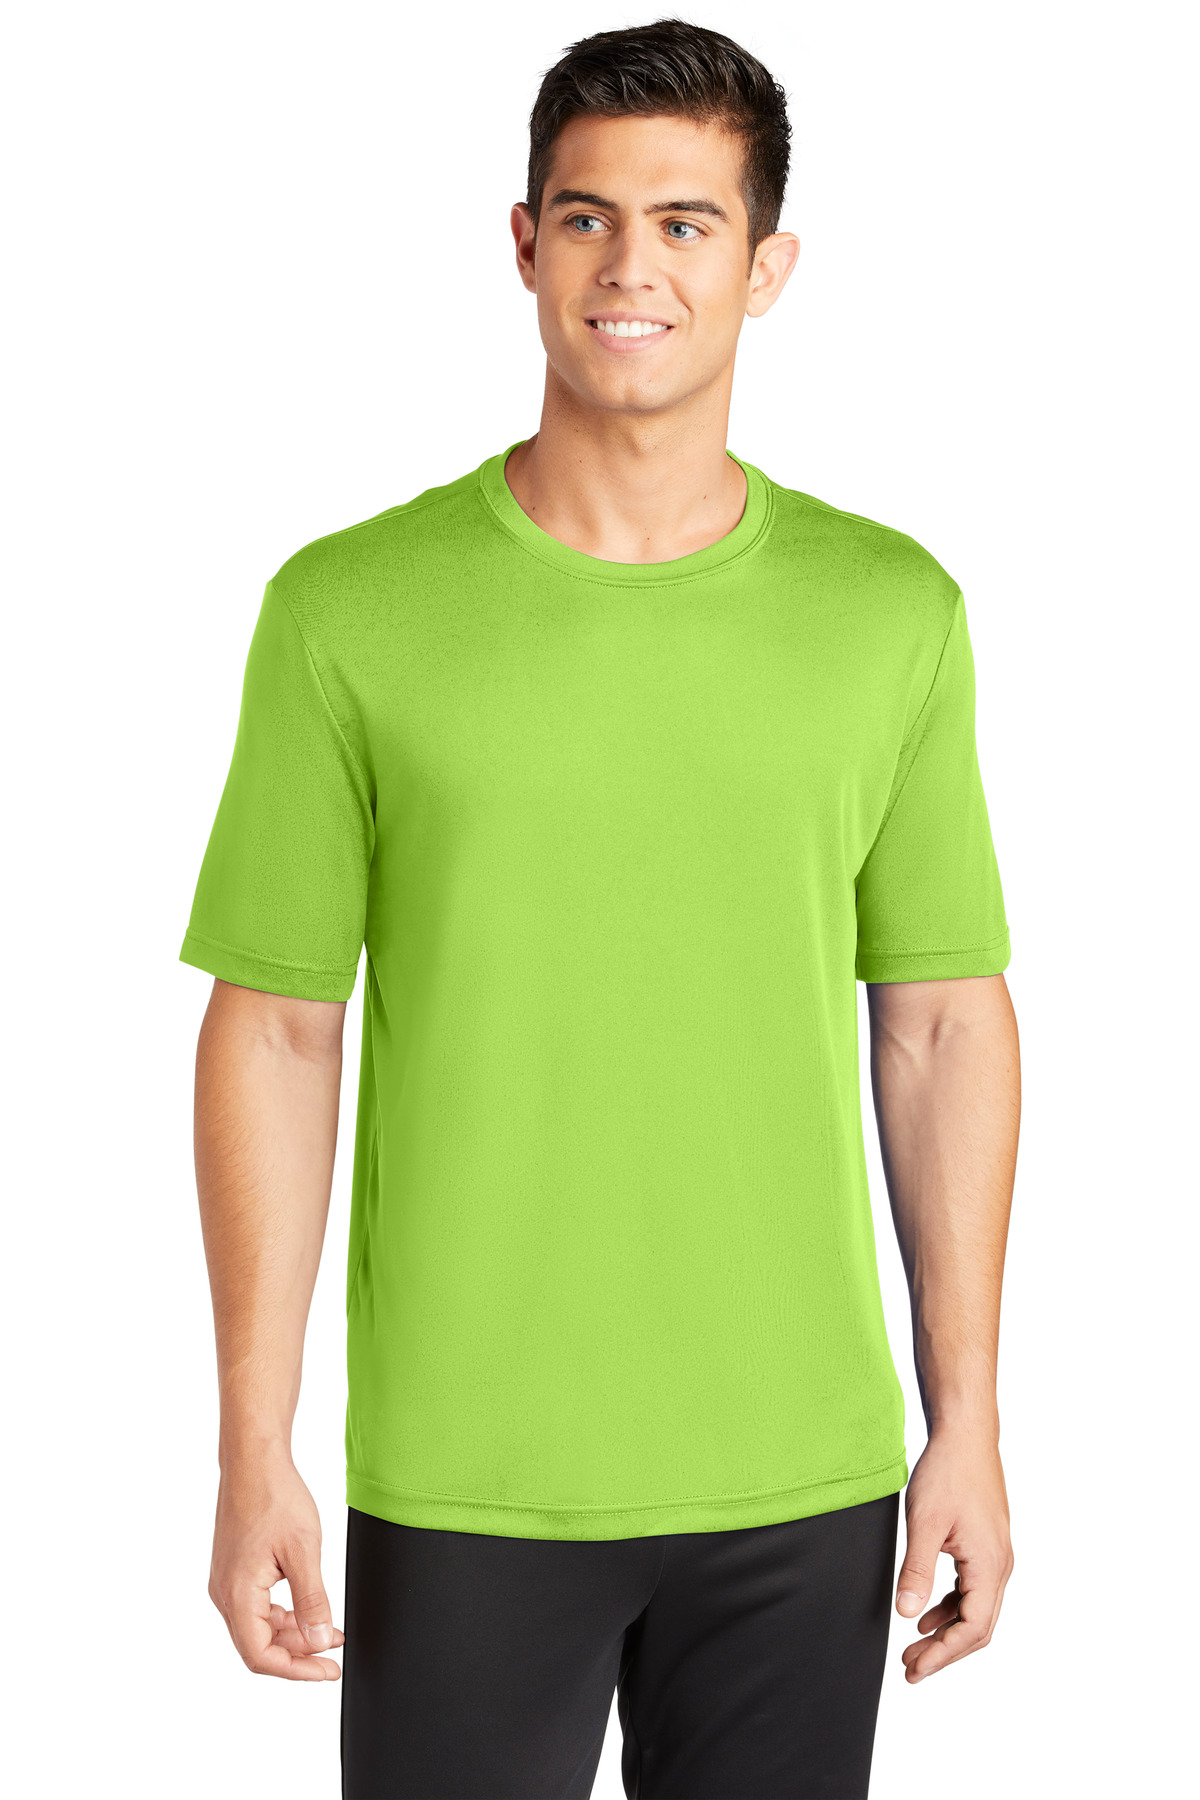 Sport-Tek Activewear T-Shirts for Hospitality ® PosiCharge® Competitor Tee.-Sport-Tek